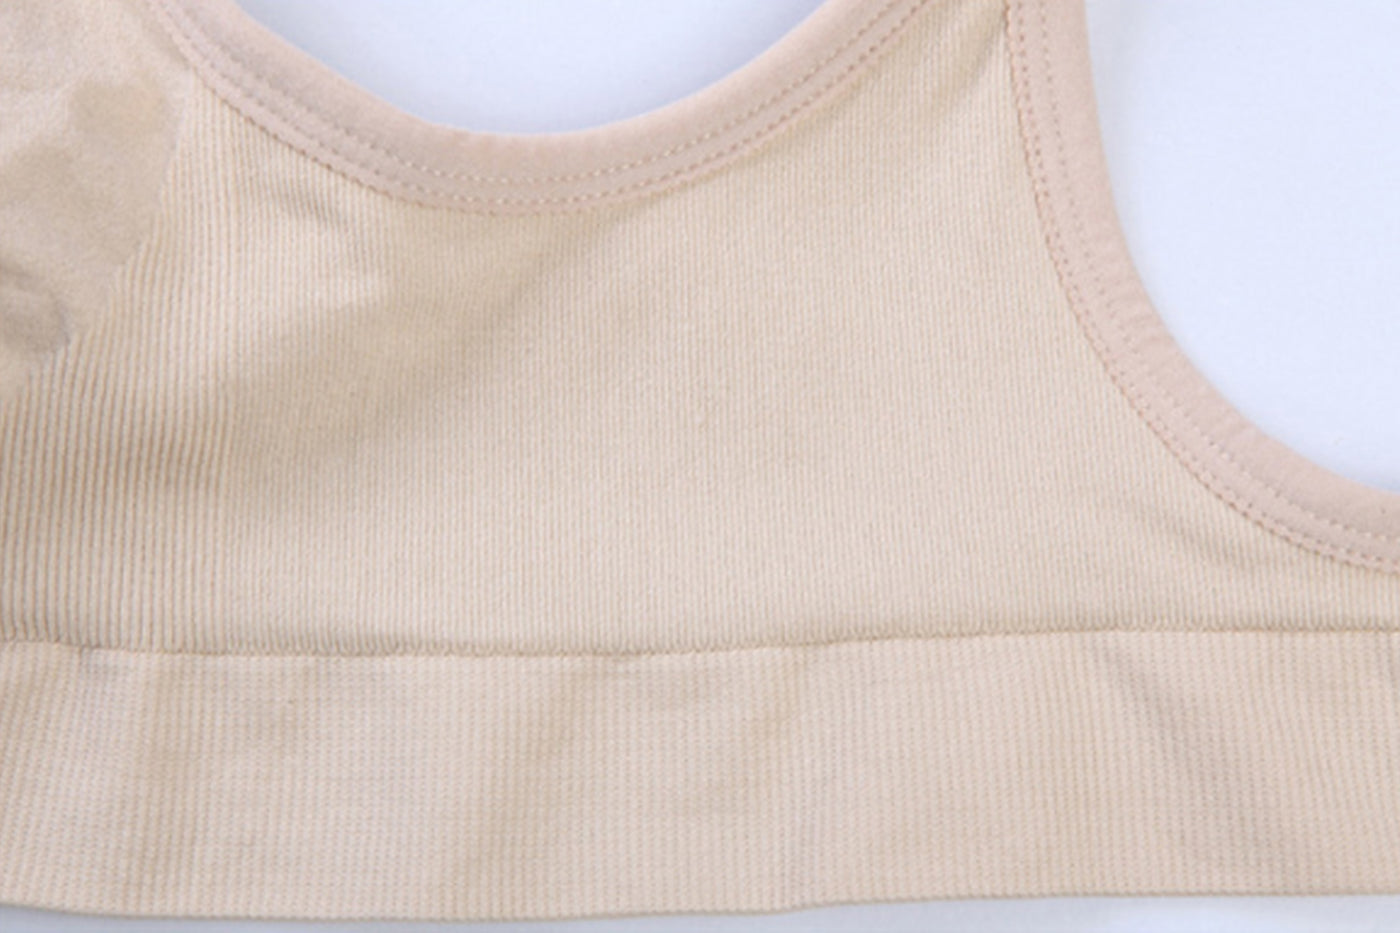 iLoveSIA Nursing Bra Plus Size breast feeding Bar Underwear 3PACK - iLoveSIA